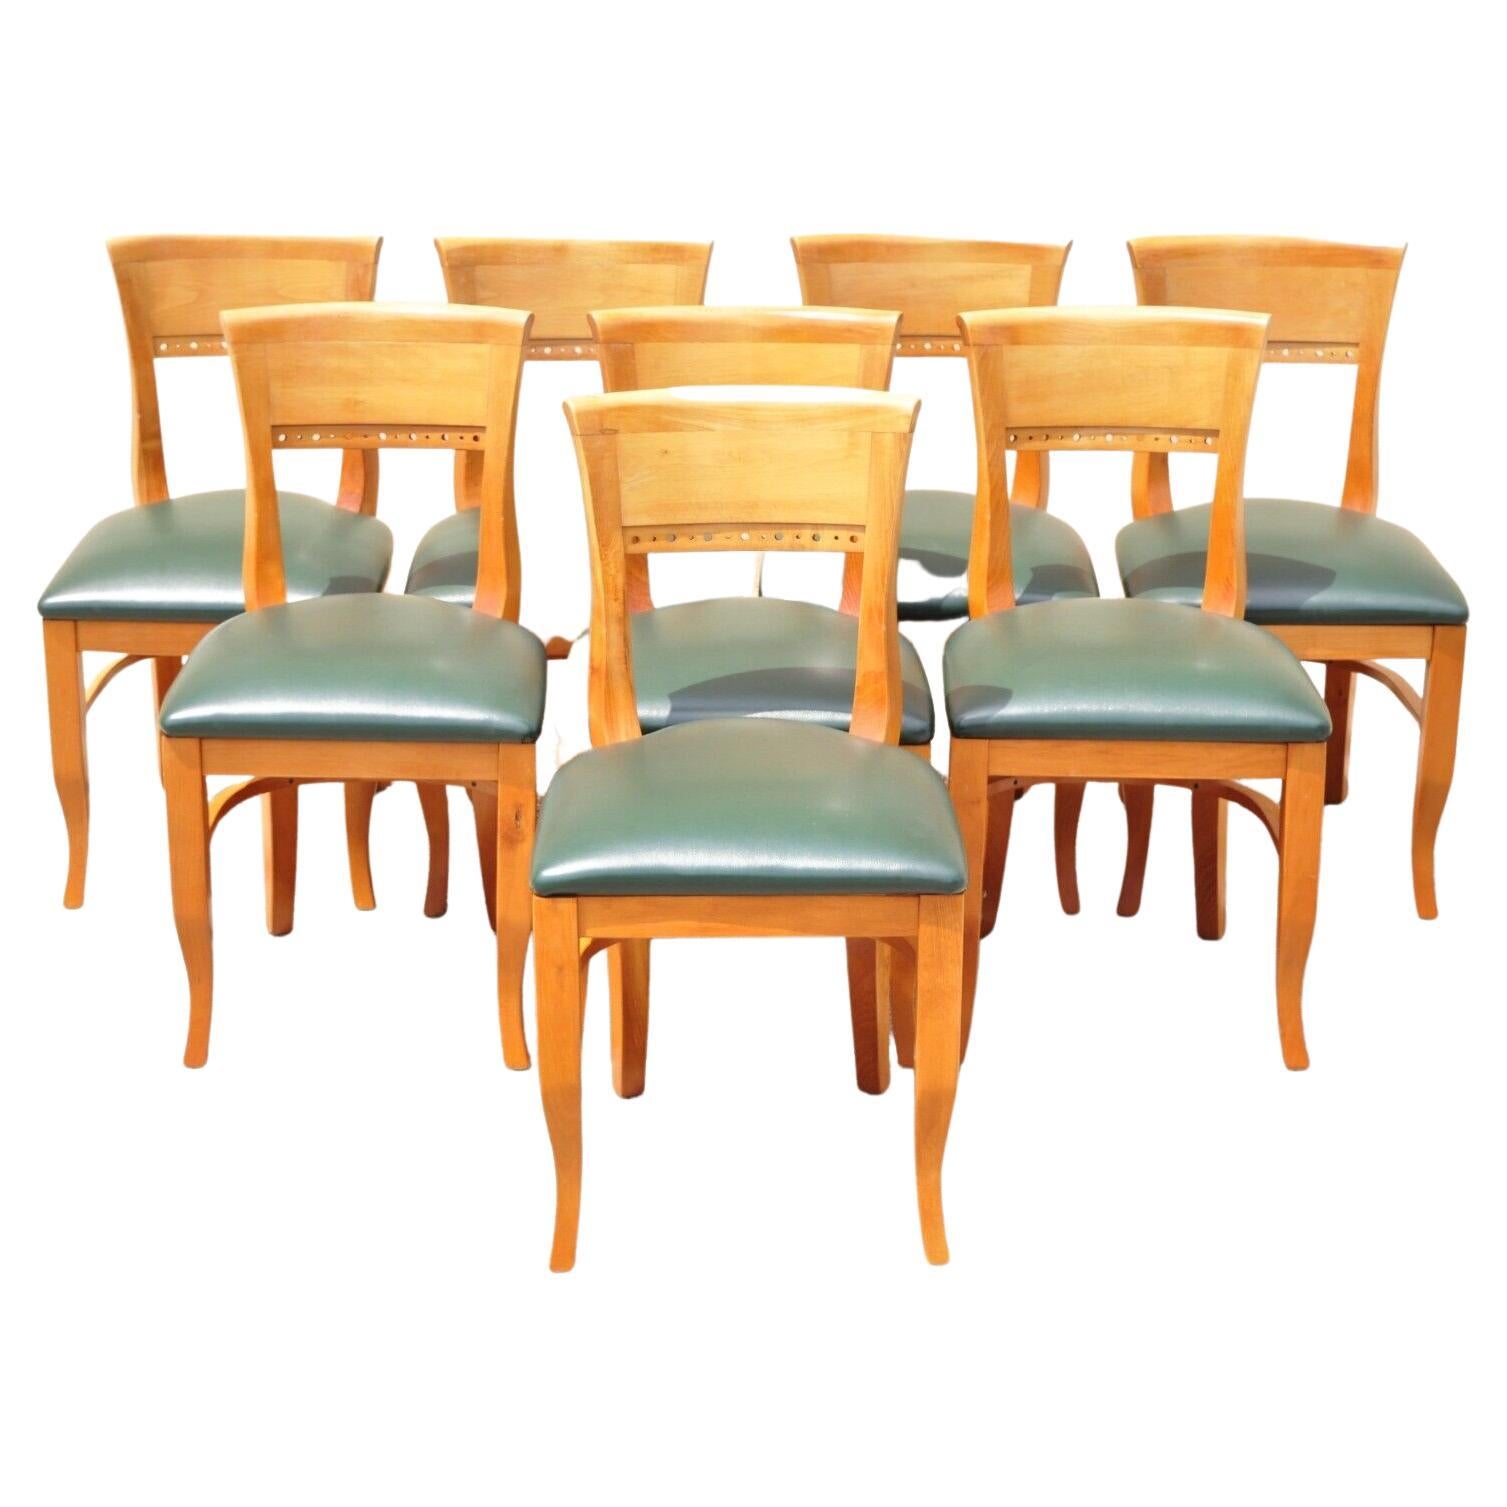 Art Deco Stil Ahornholz-Esszimmerstühle von Prince Seating, 8er-Set